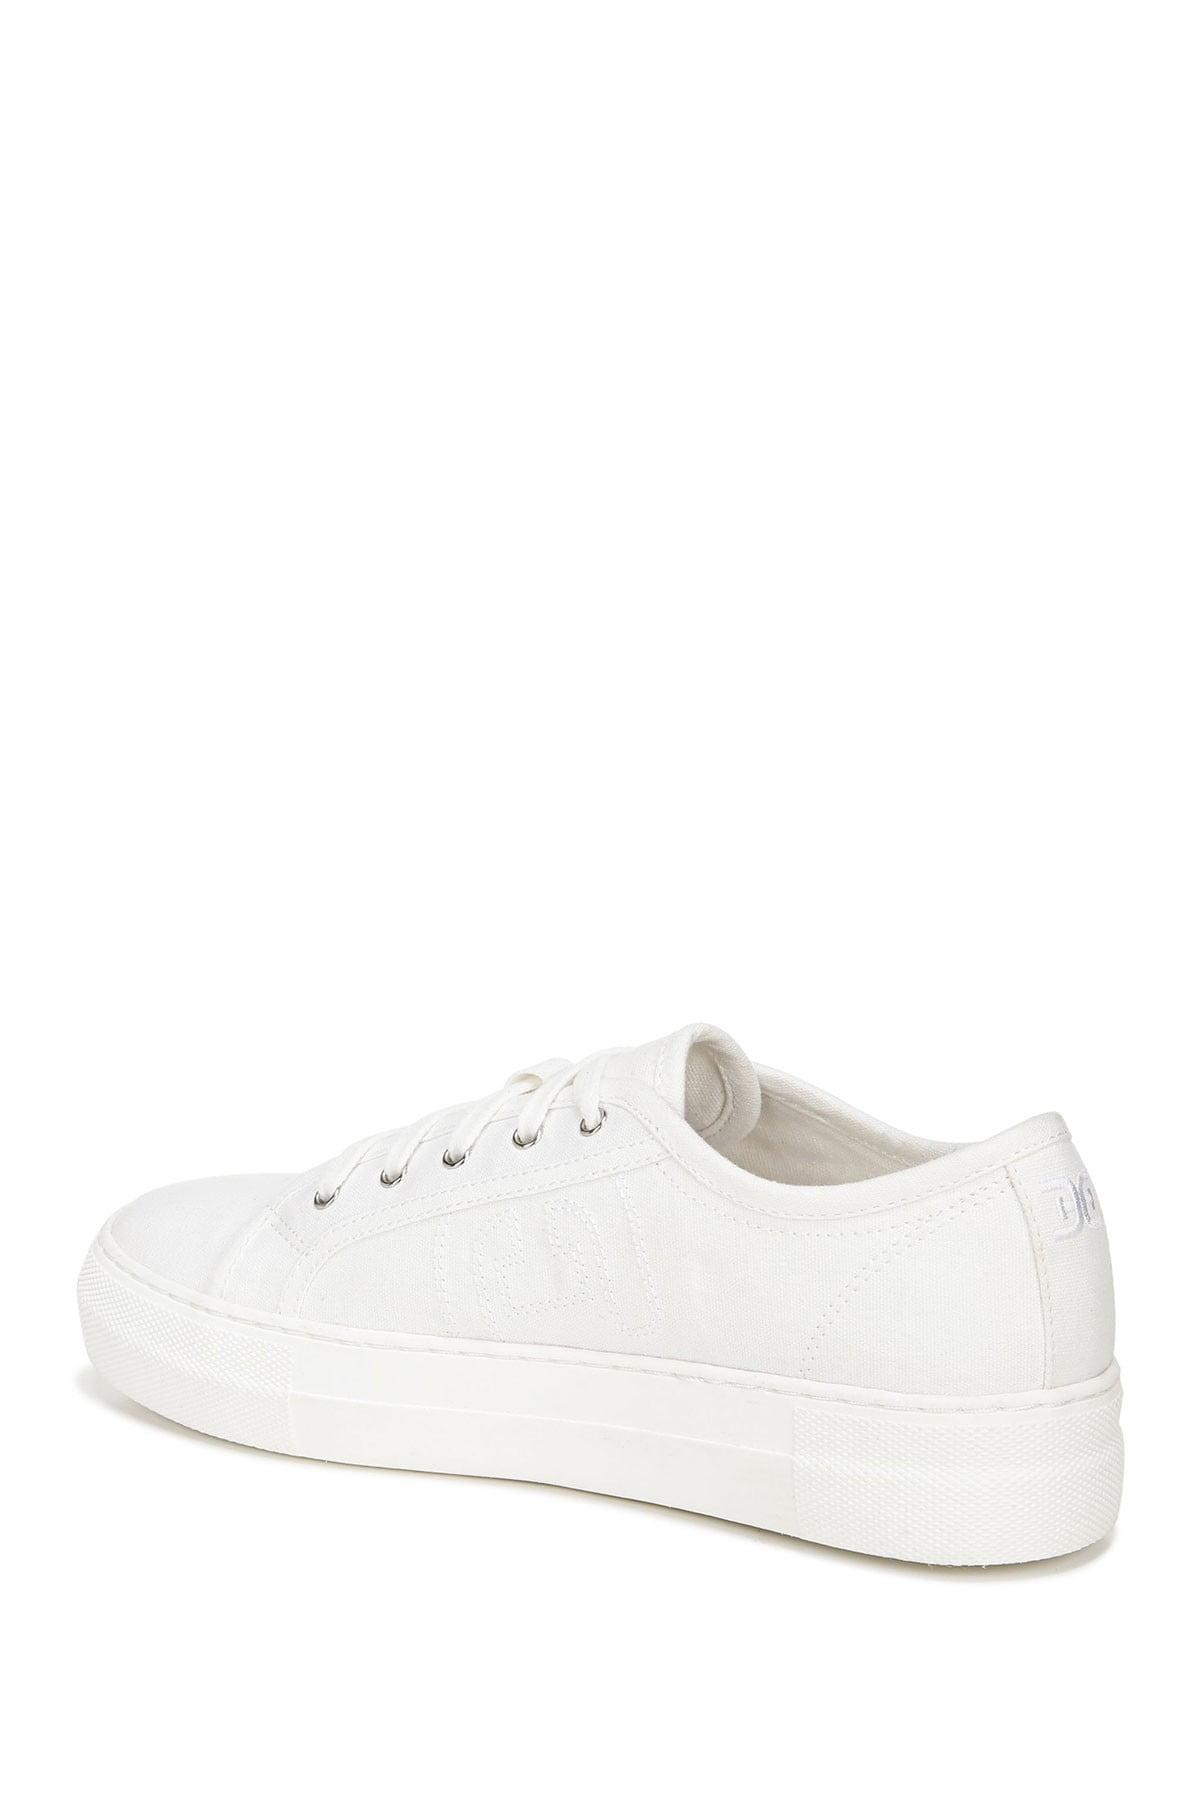 Sam Edelman Canvas Genara Low Top Sneaker in White - Lyst